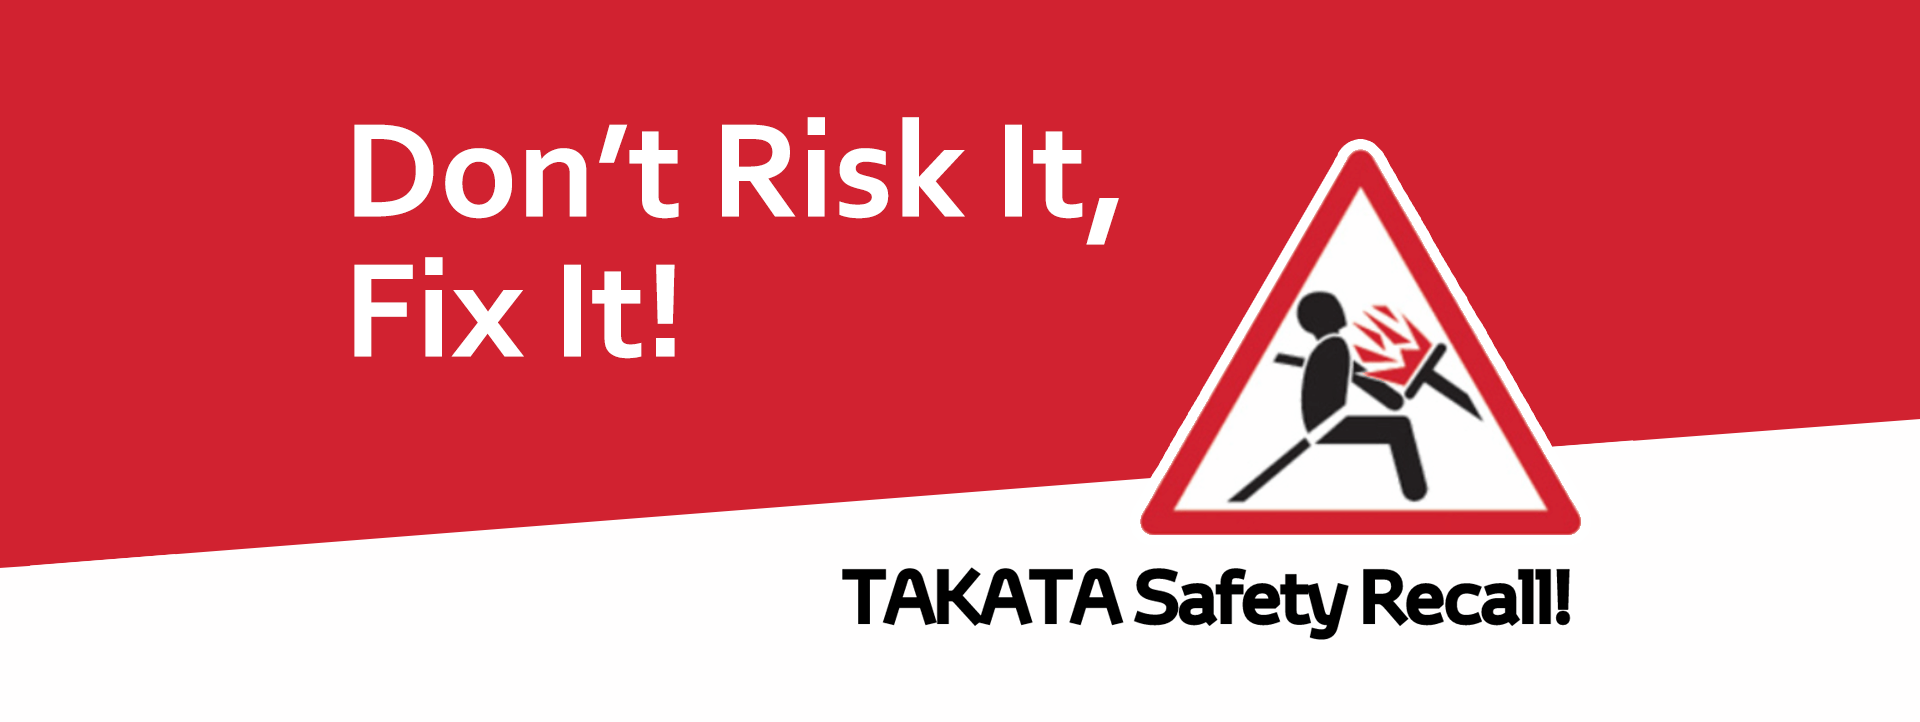 Takata Safety Recall slide